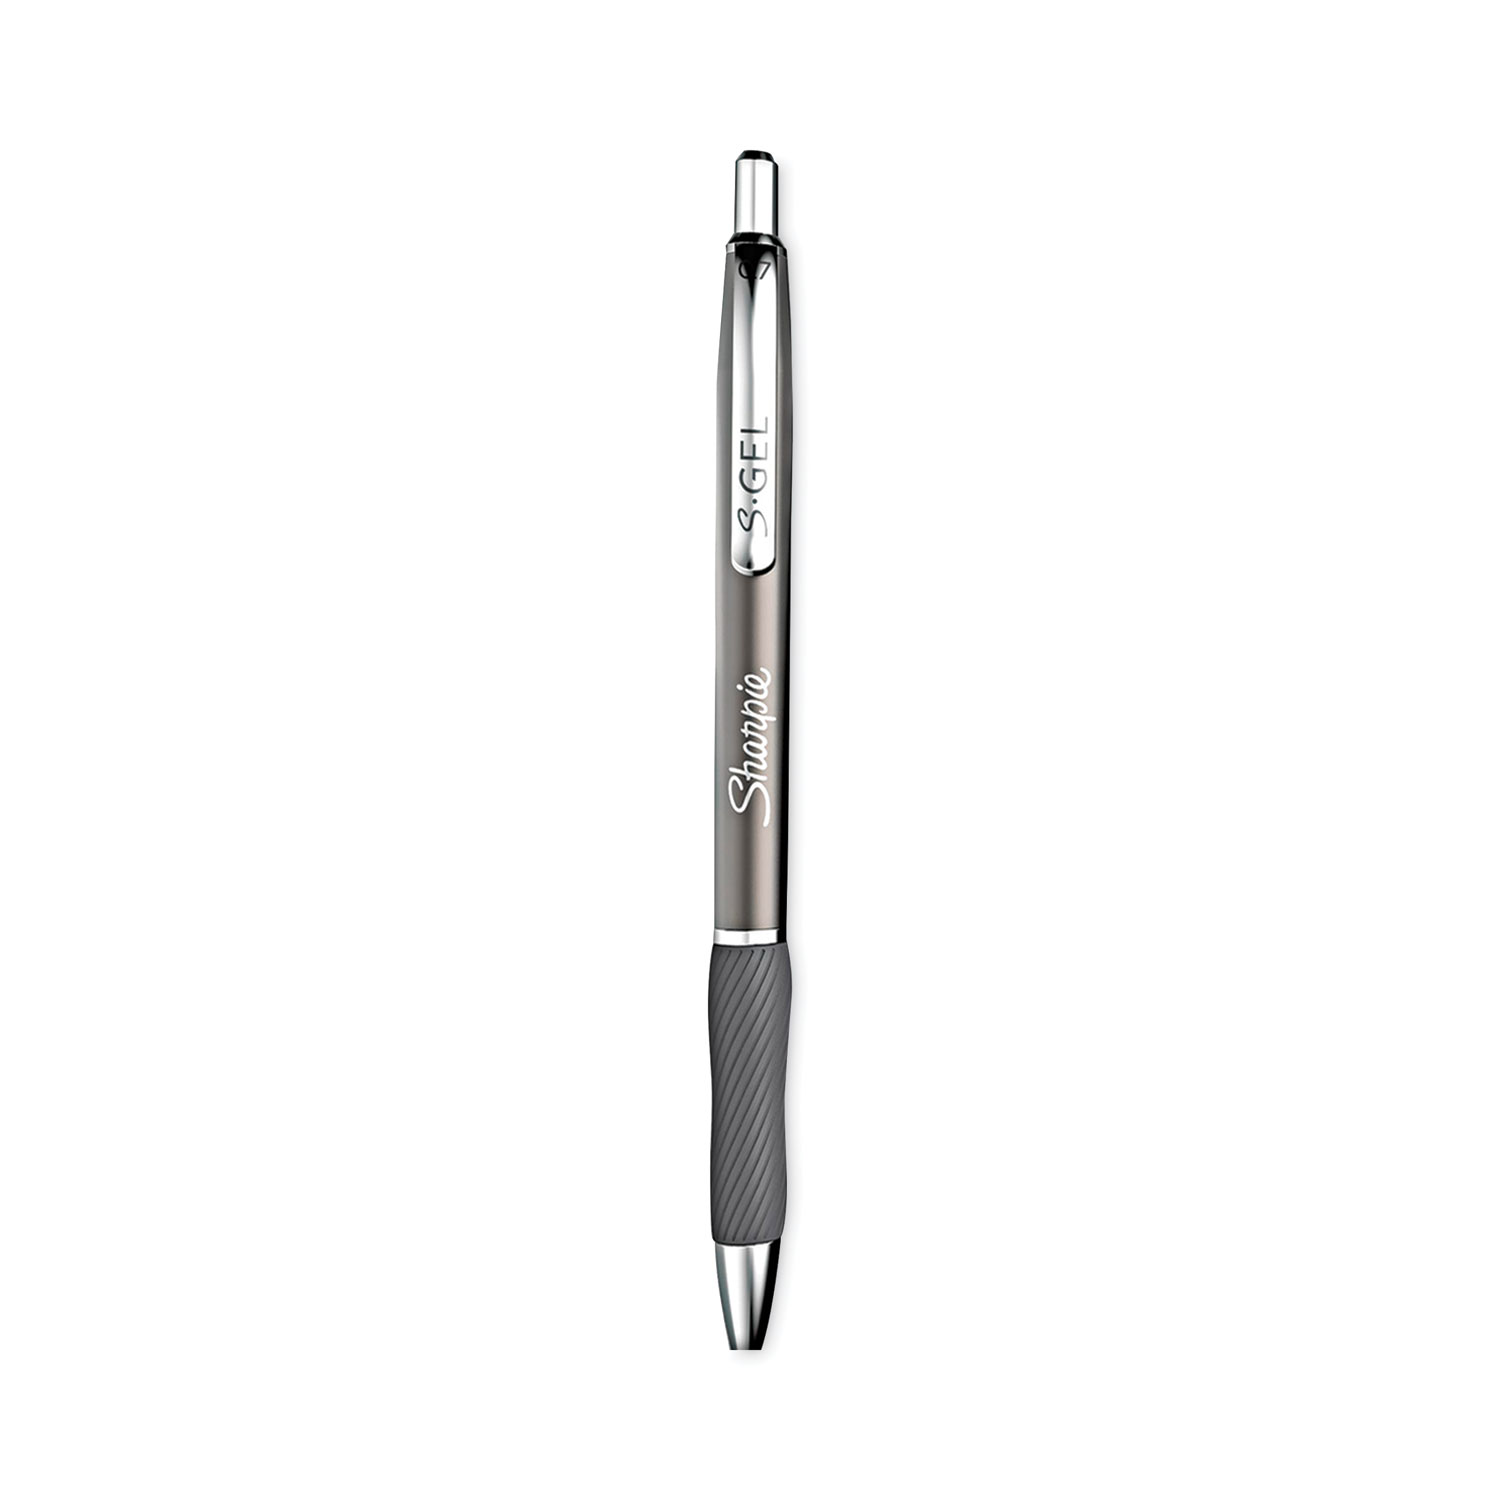 Sharpie S-Gel Retractable Gel Pen, Bold 1 mm, Black Ink/Barrel, 4/Pack